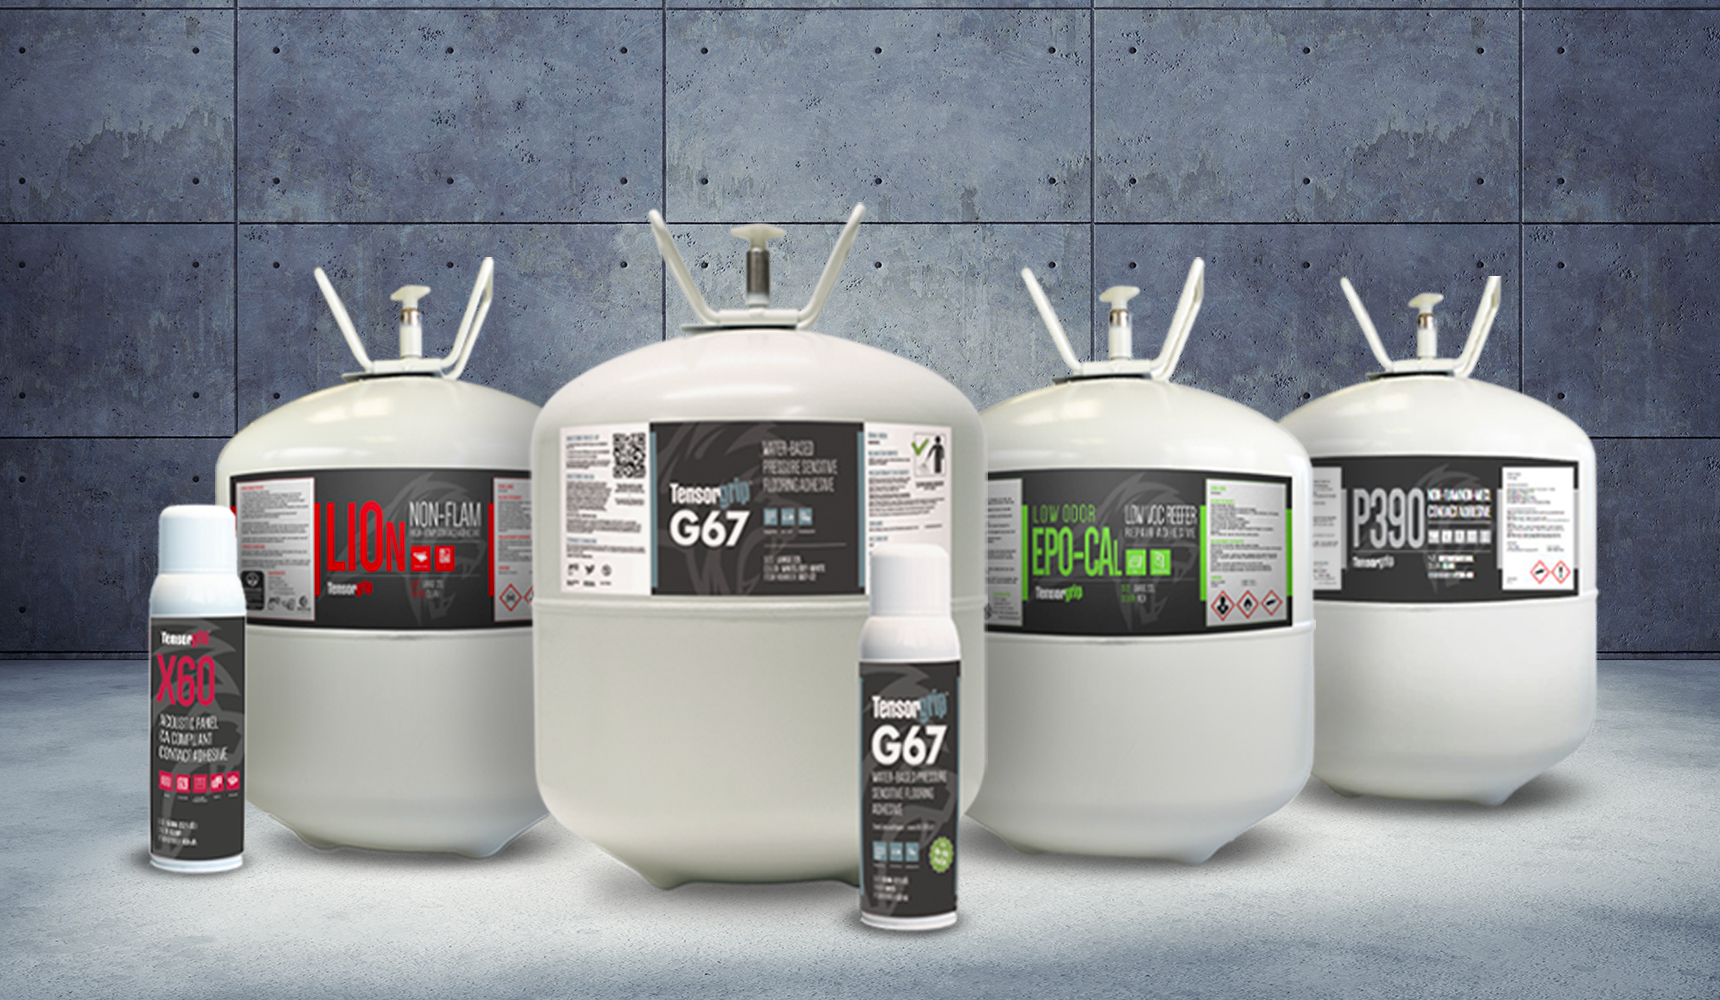 Quin Global P310 Pressure Sensitive Spray Adhesive - Chemical Concepts